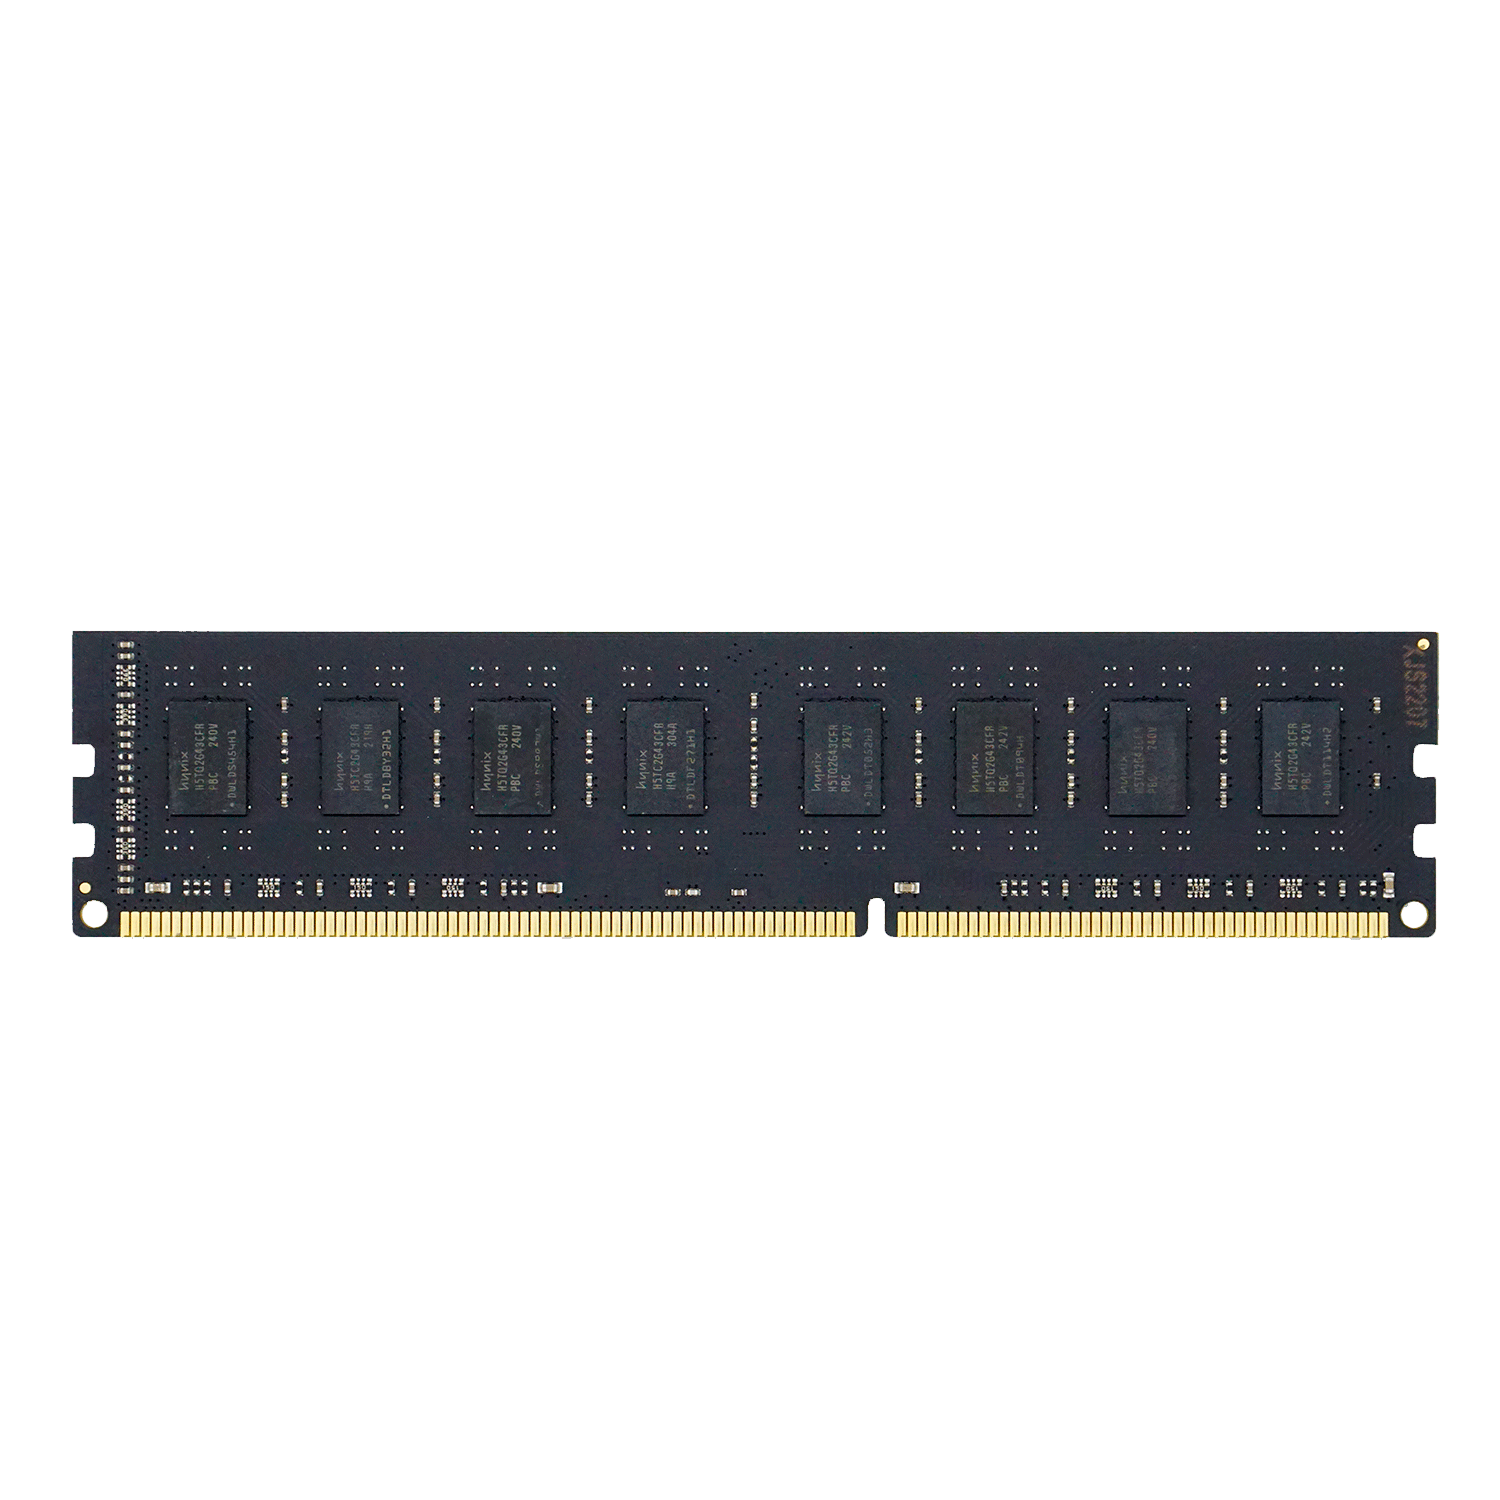 Memória RAM Goline 4GB / DDR3 /  1600MHz - (GLD3D1600/4)